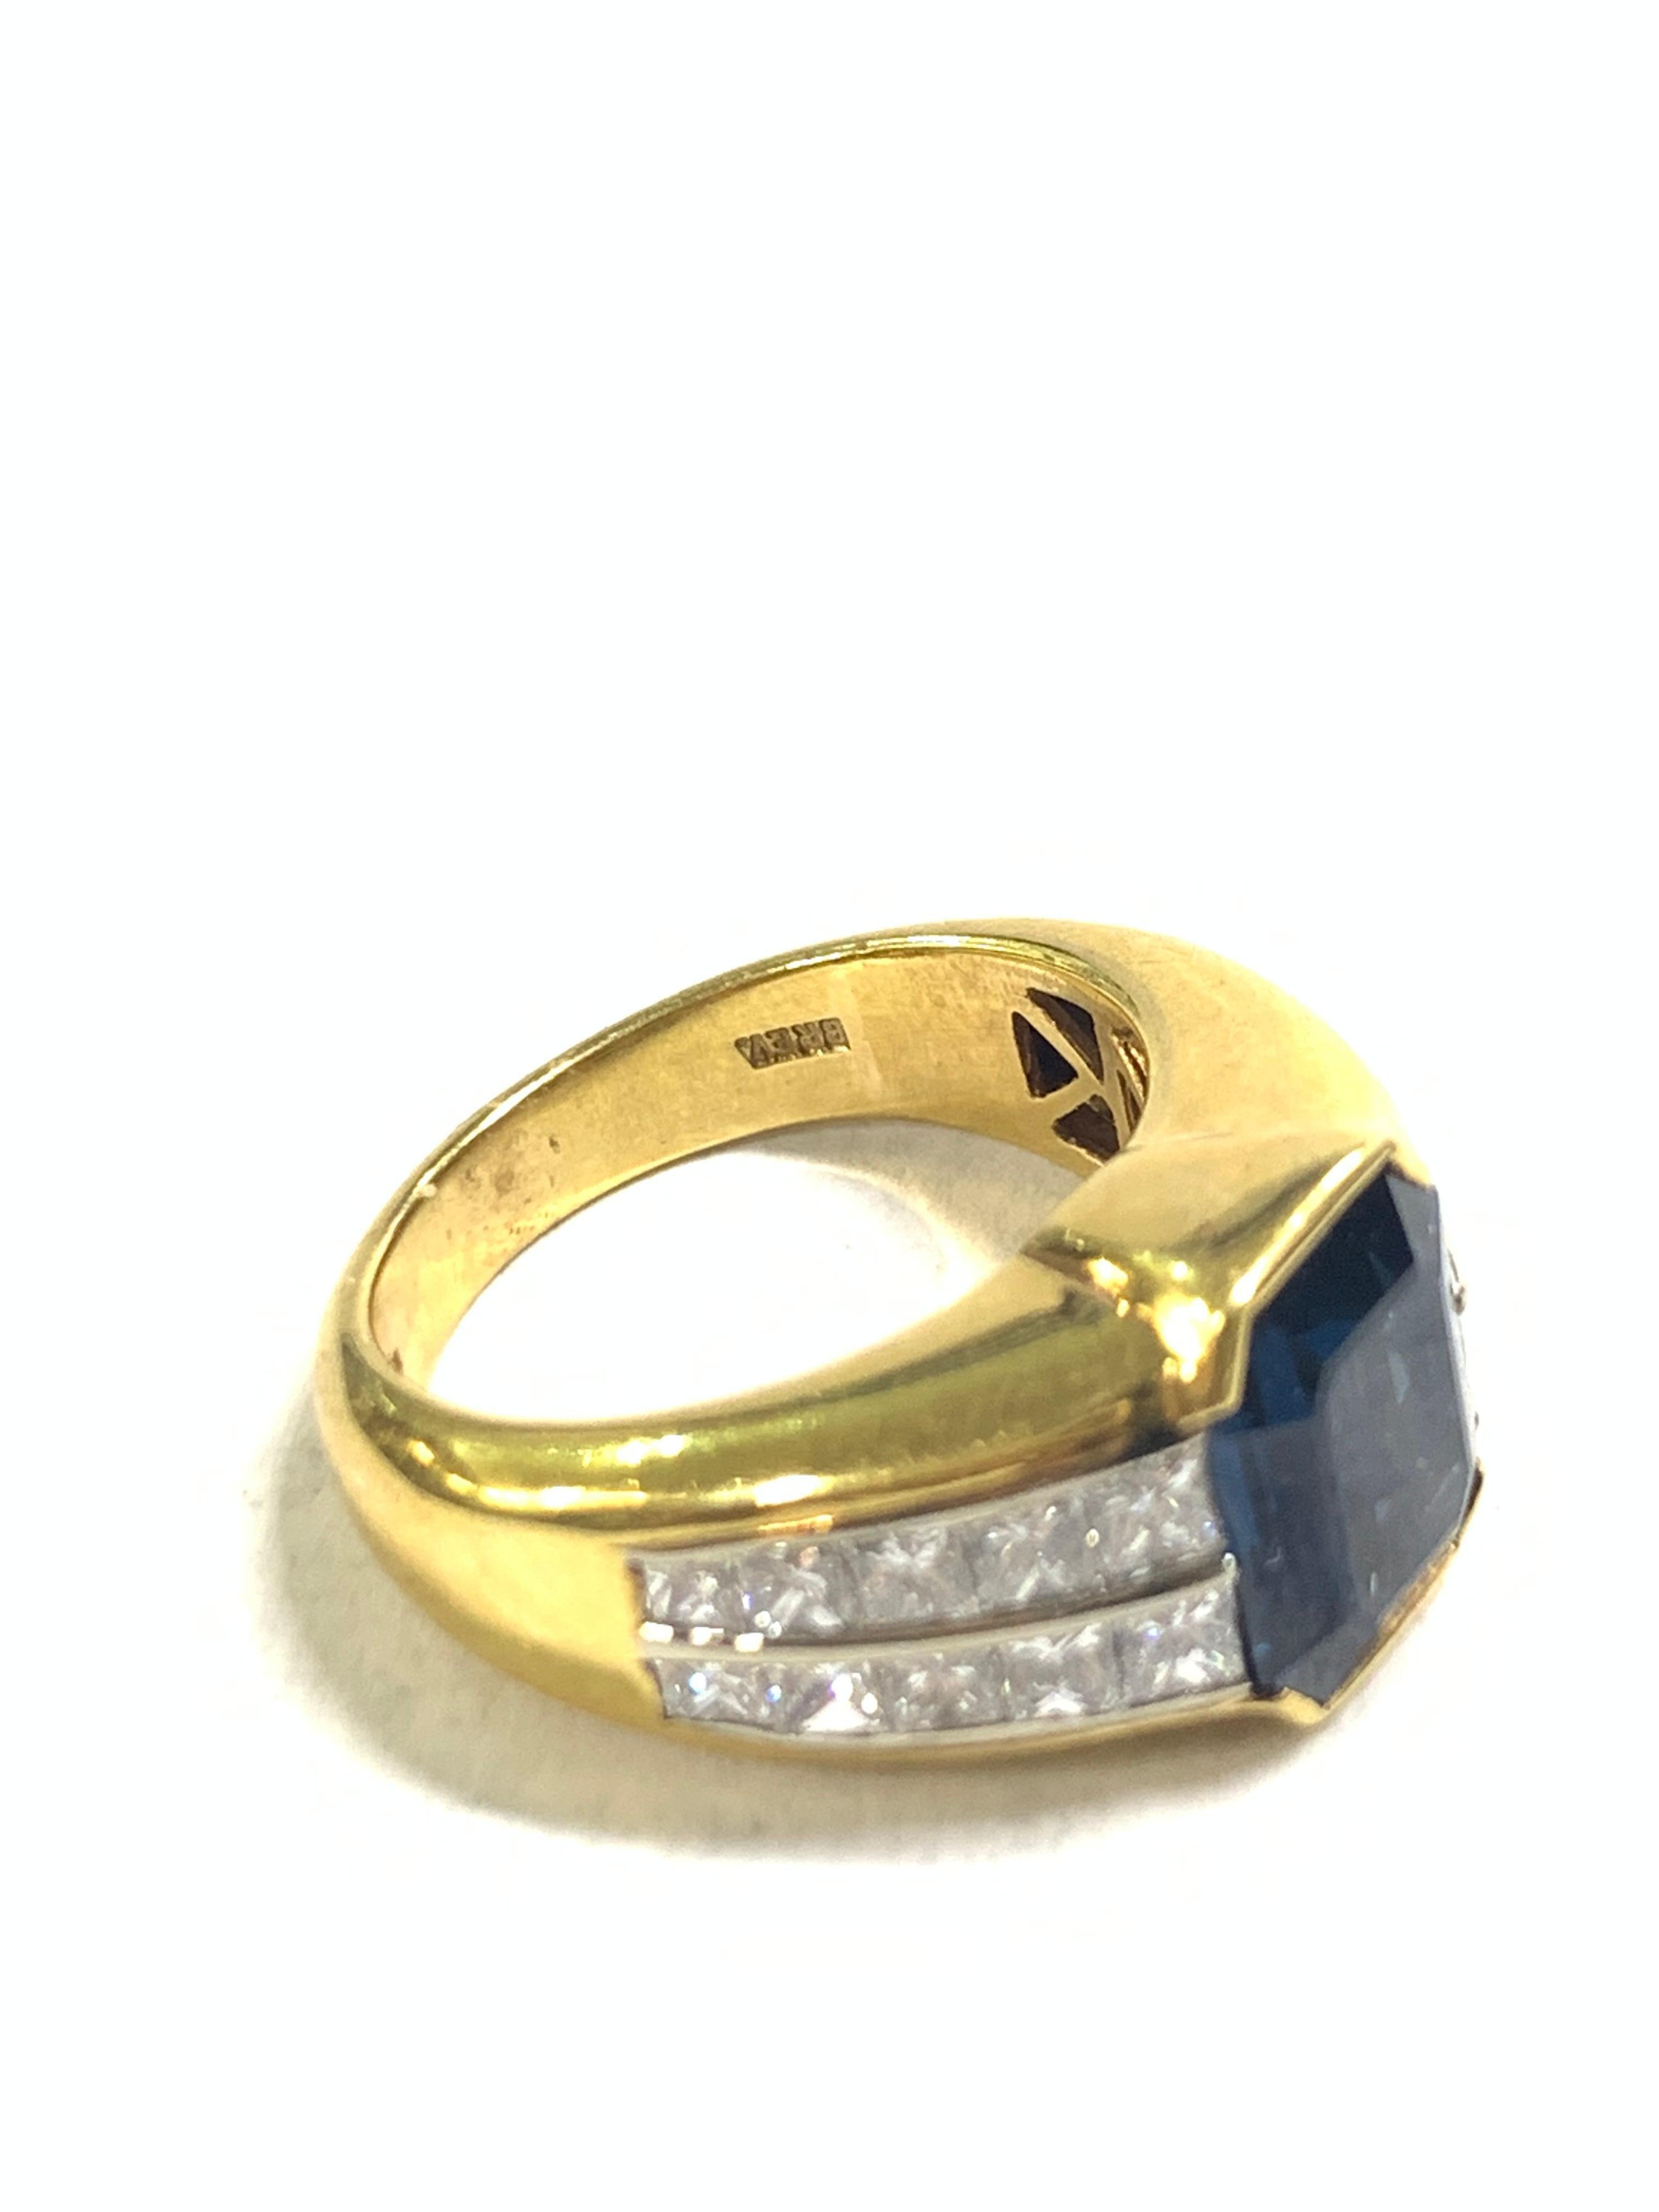 Beautiful 4.19 Carat Sapphire and Princess Cut Statement Ring 

Stones: Blue Sapphire 
Stone Shape: Emerald Cut  
Top Ring Width: 10MMx8MM
Stone Weight: 4.19 Carat
Stones: Diamond
Stone Clarity: VS Clarity
Stone Carat Weight: 1.52 Carat
Material: